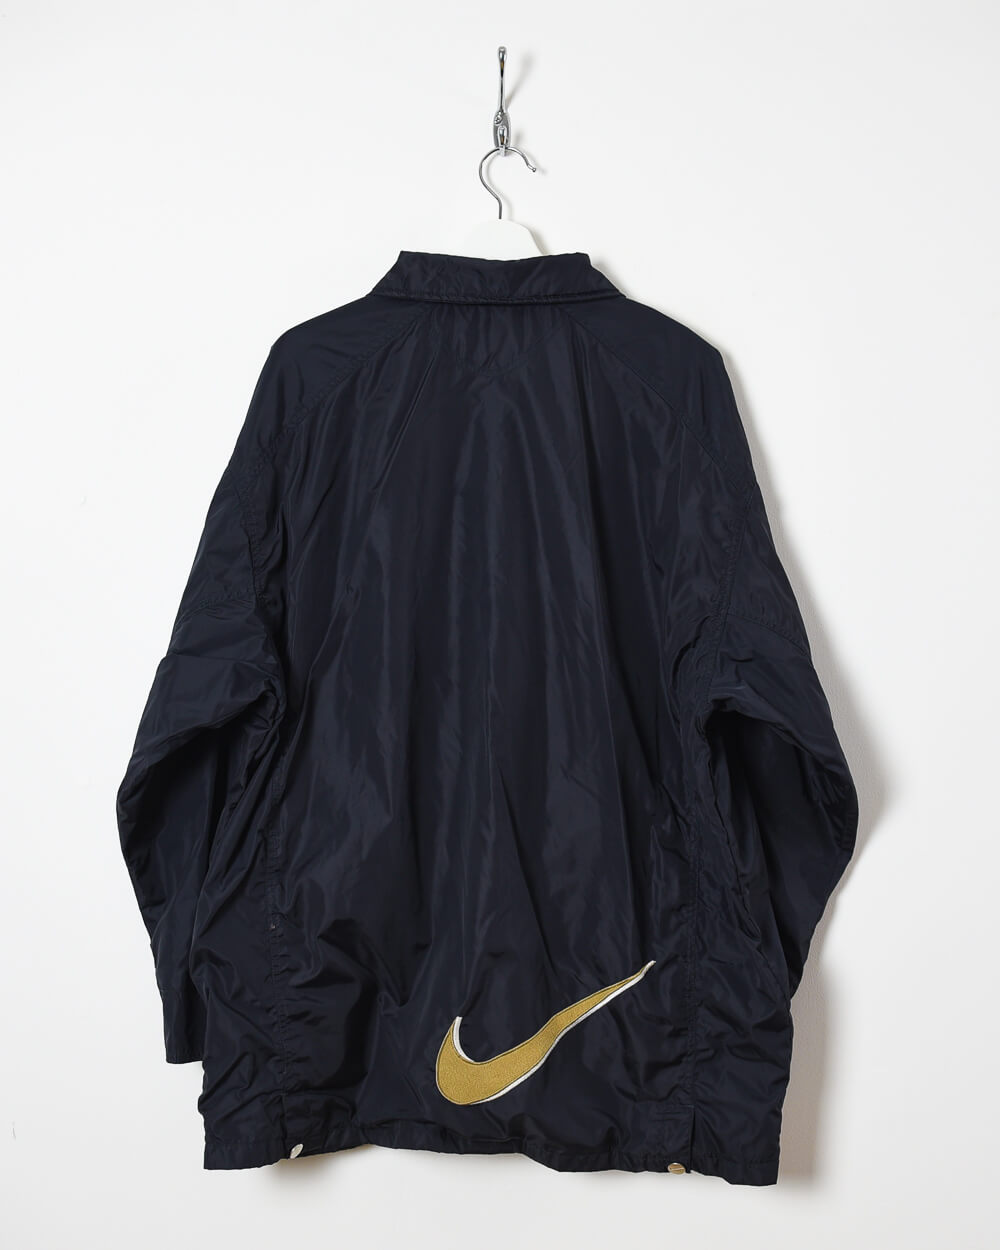 Nike Jacket - Large - Domno Vintage 90s, 80s, 00s Retro and Vintage Clothing 